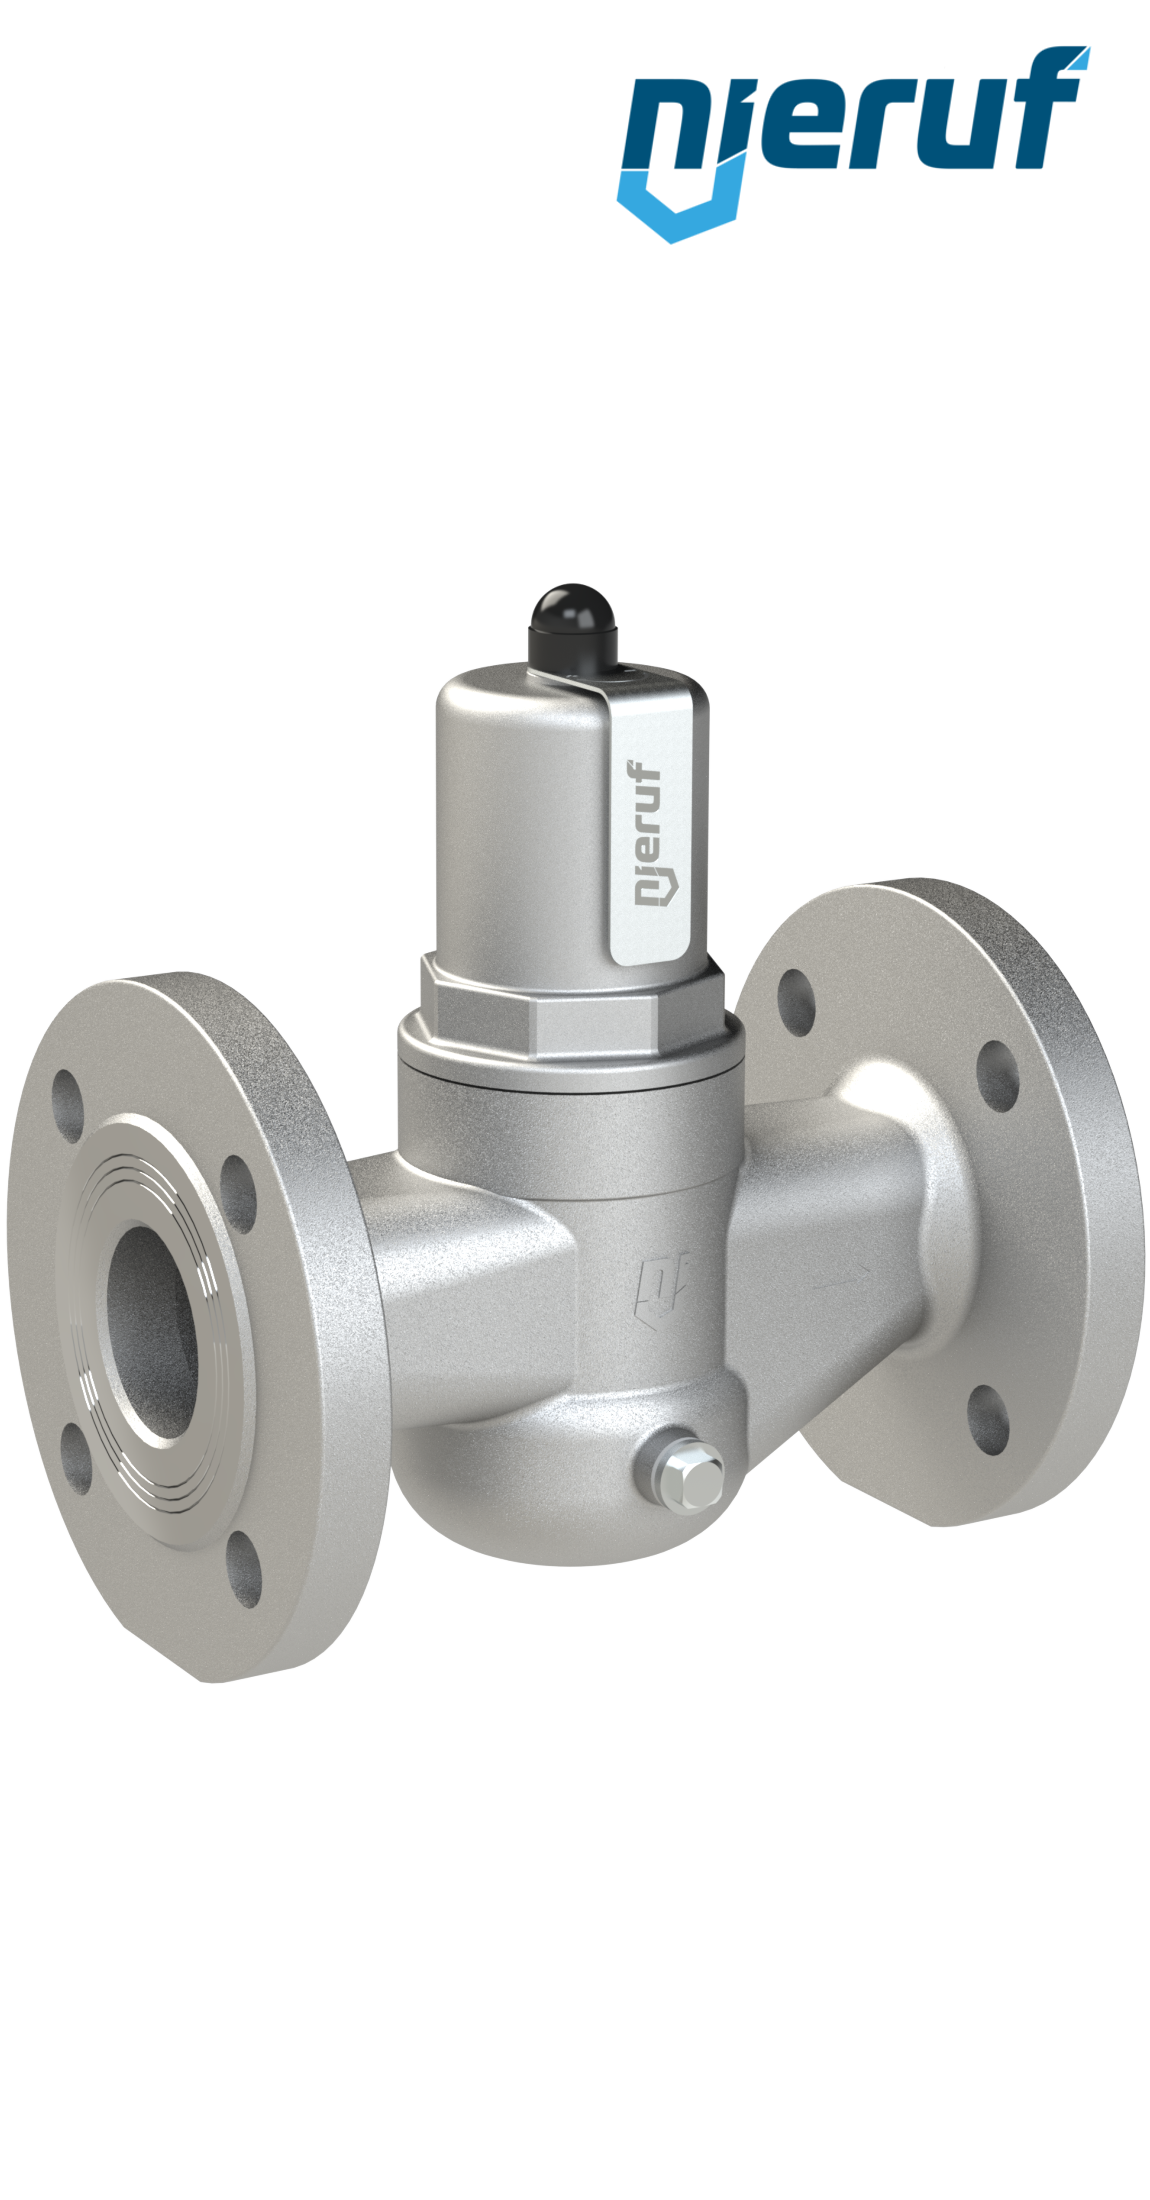 Flange-pressure reducing valve DN 25 PN40 DM07 stainless steel EPDM 0.5 - 2.0 bar